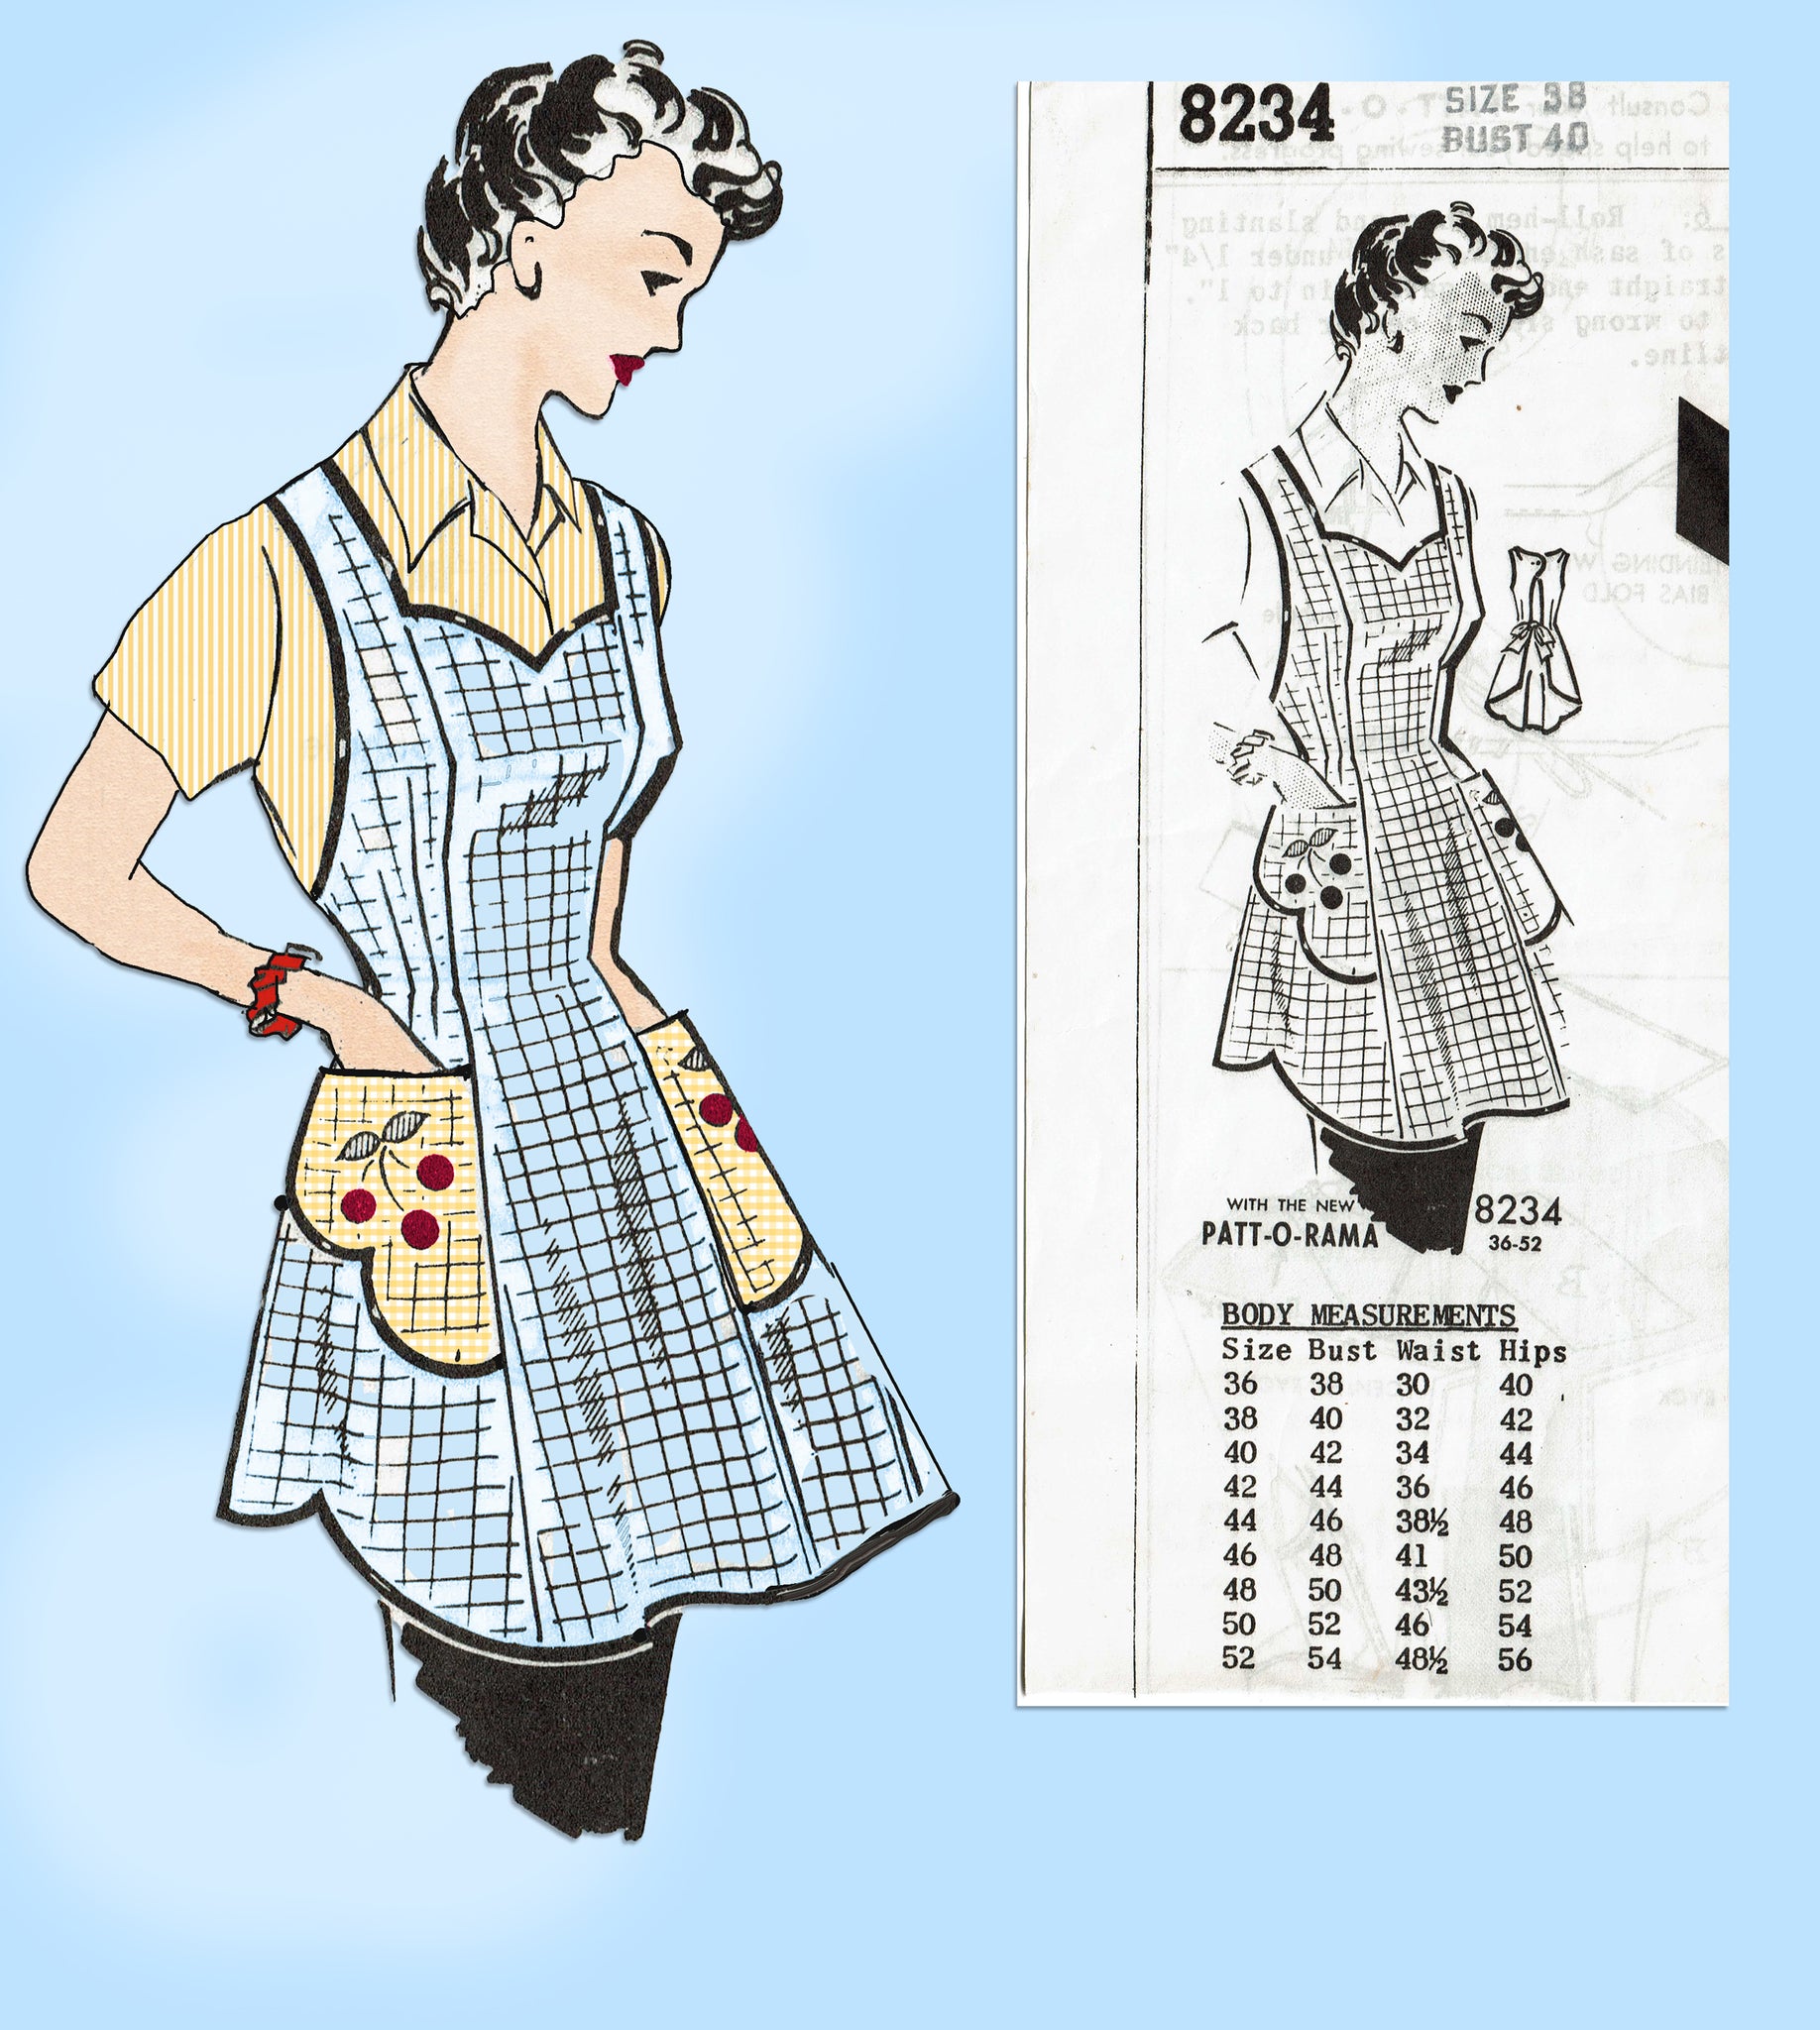 1) Order the Belly-Flattener on approval! [1950] : vintageads